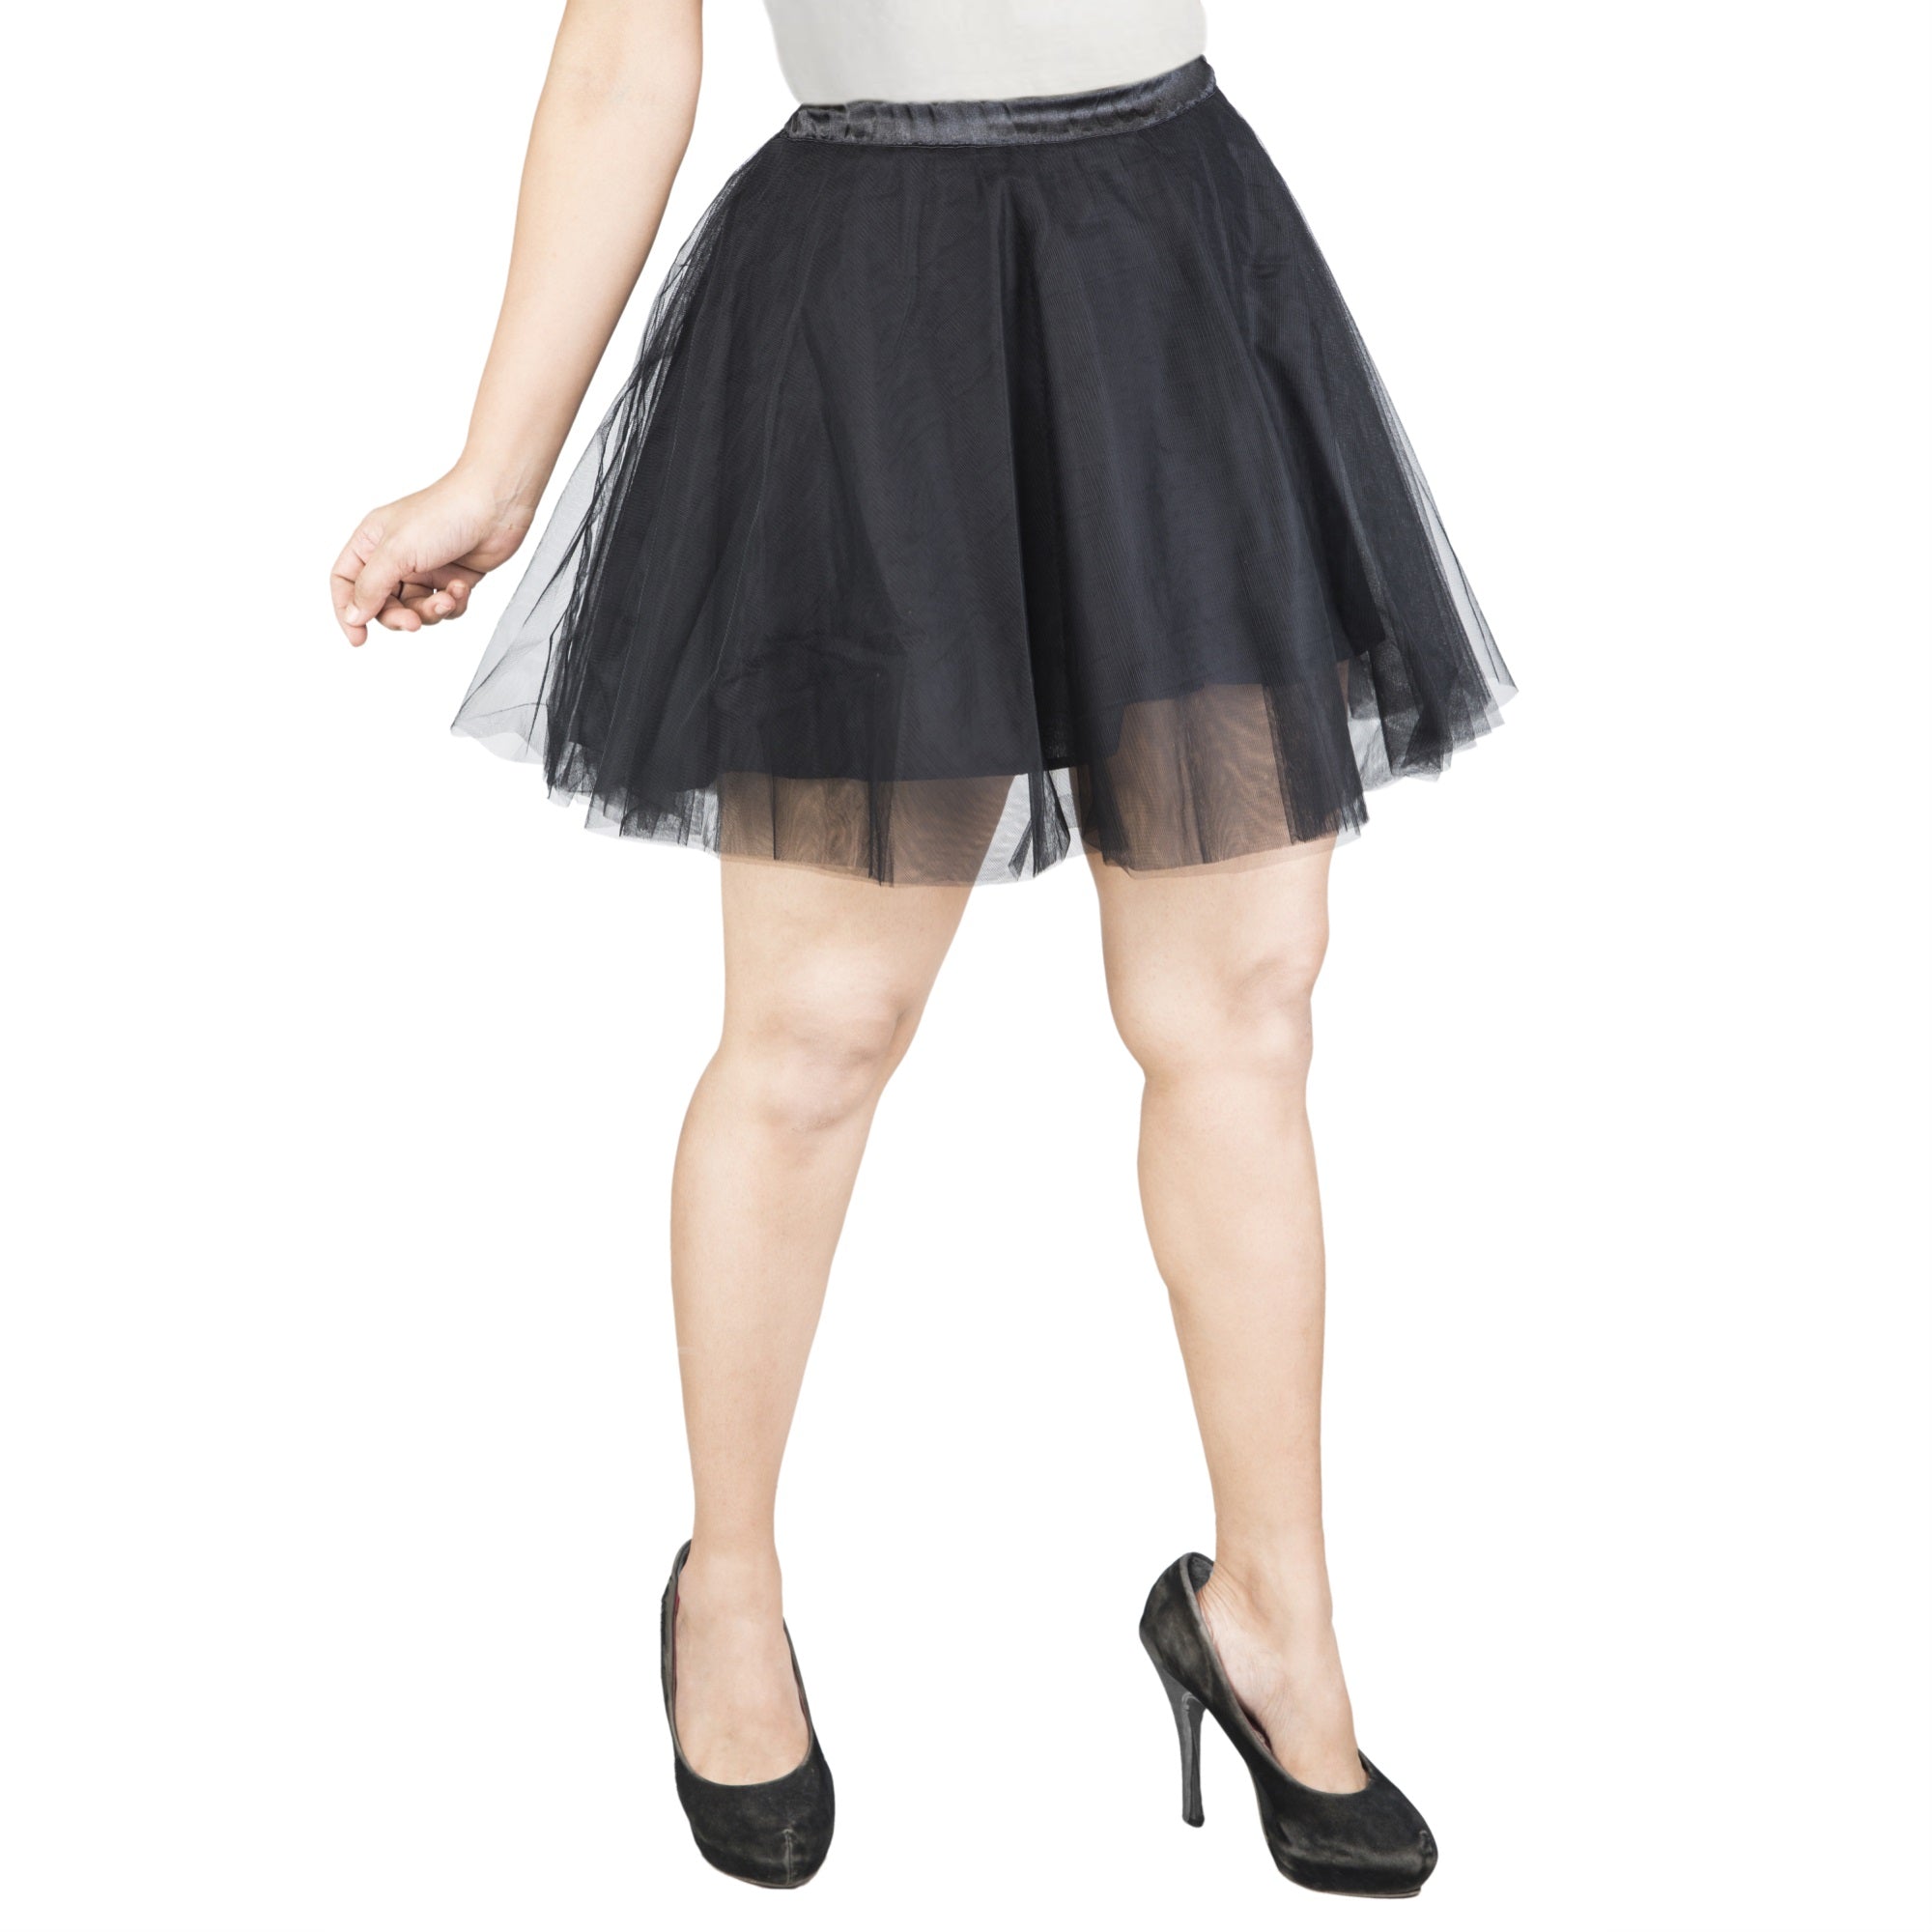 Women's Halloween Costume Mini Tulle Skirt-Festive Look Crinoline-Black